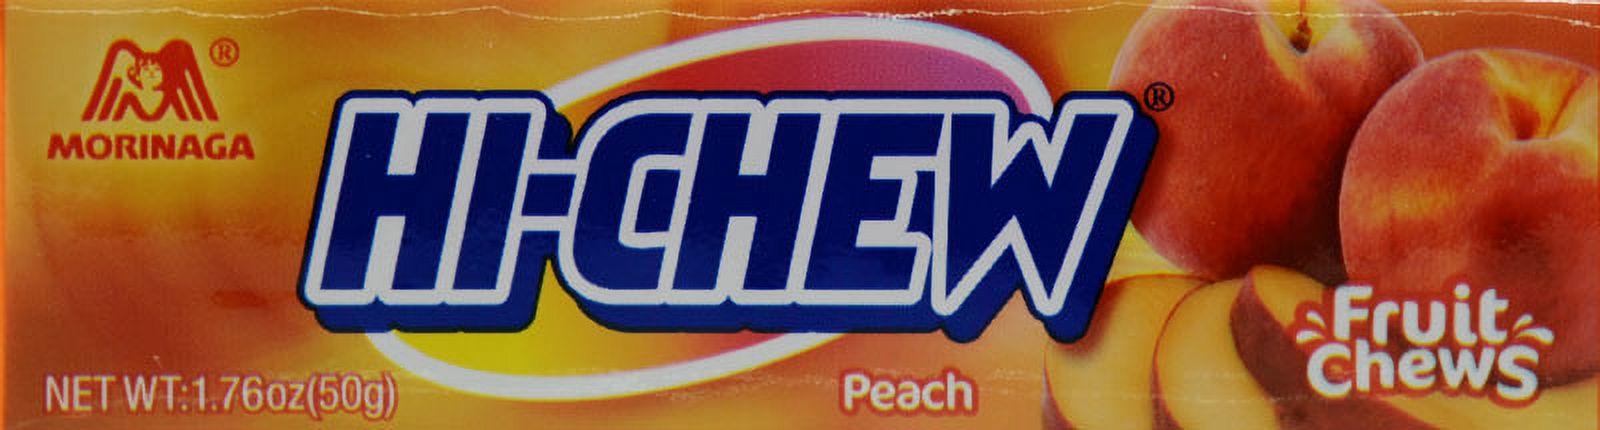 Hi-Chew Peach Fruit Chews, 1.76 oz - image 2 of 6